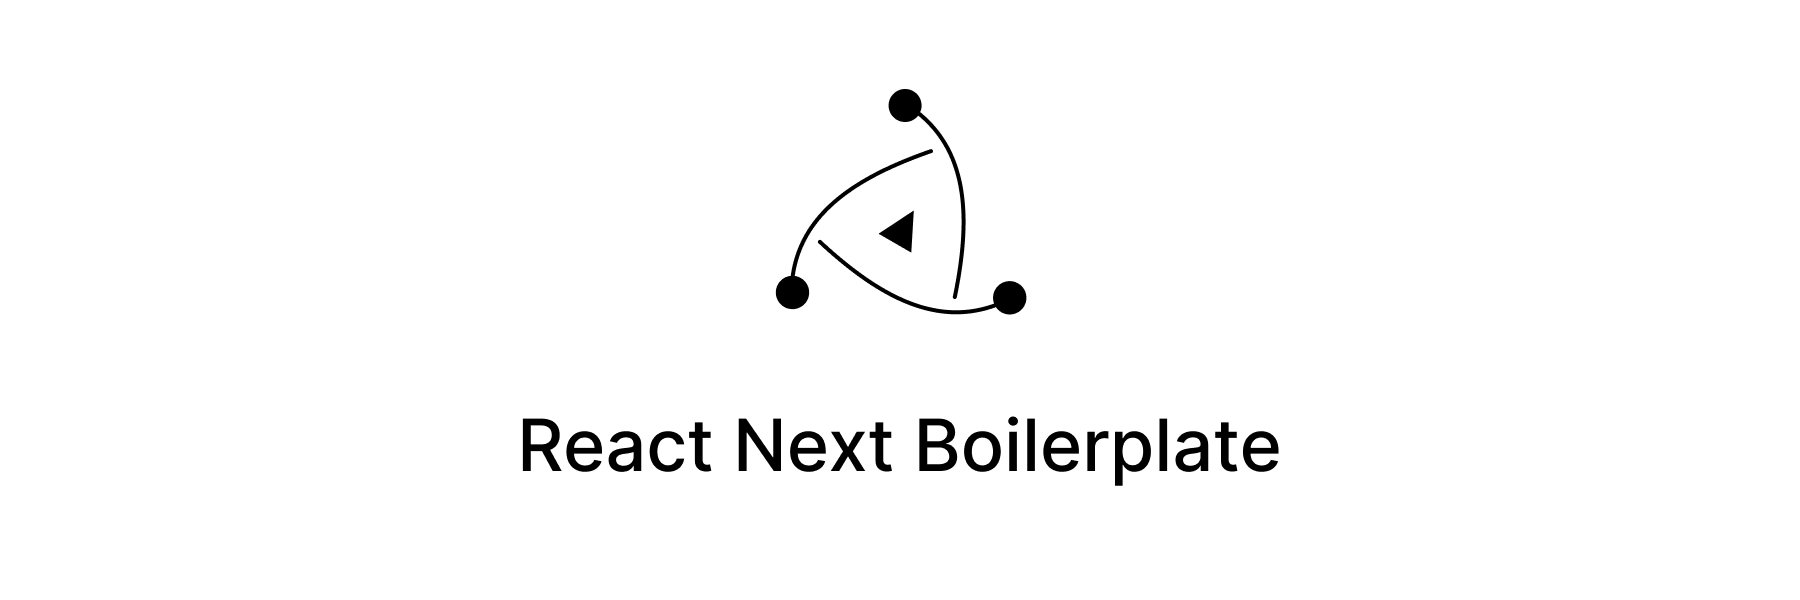 react-next-boilerplate